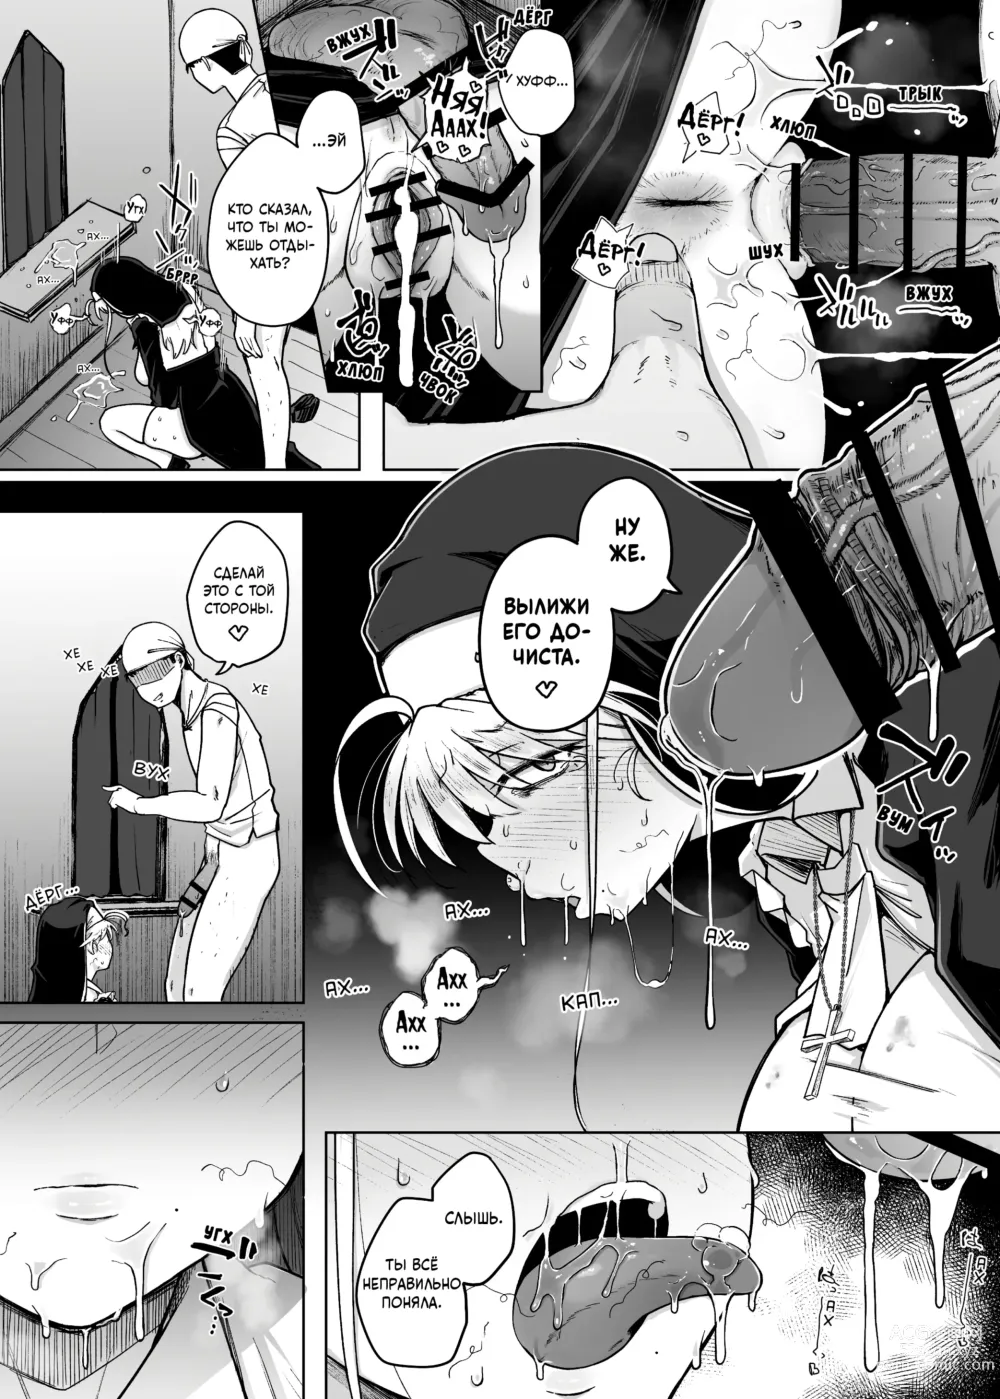 Page 50 of doujinshi Дыра для исповеданий - часть 2